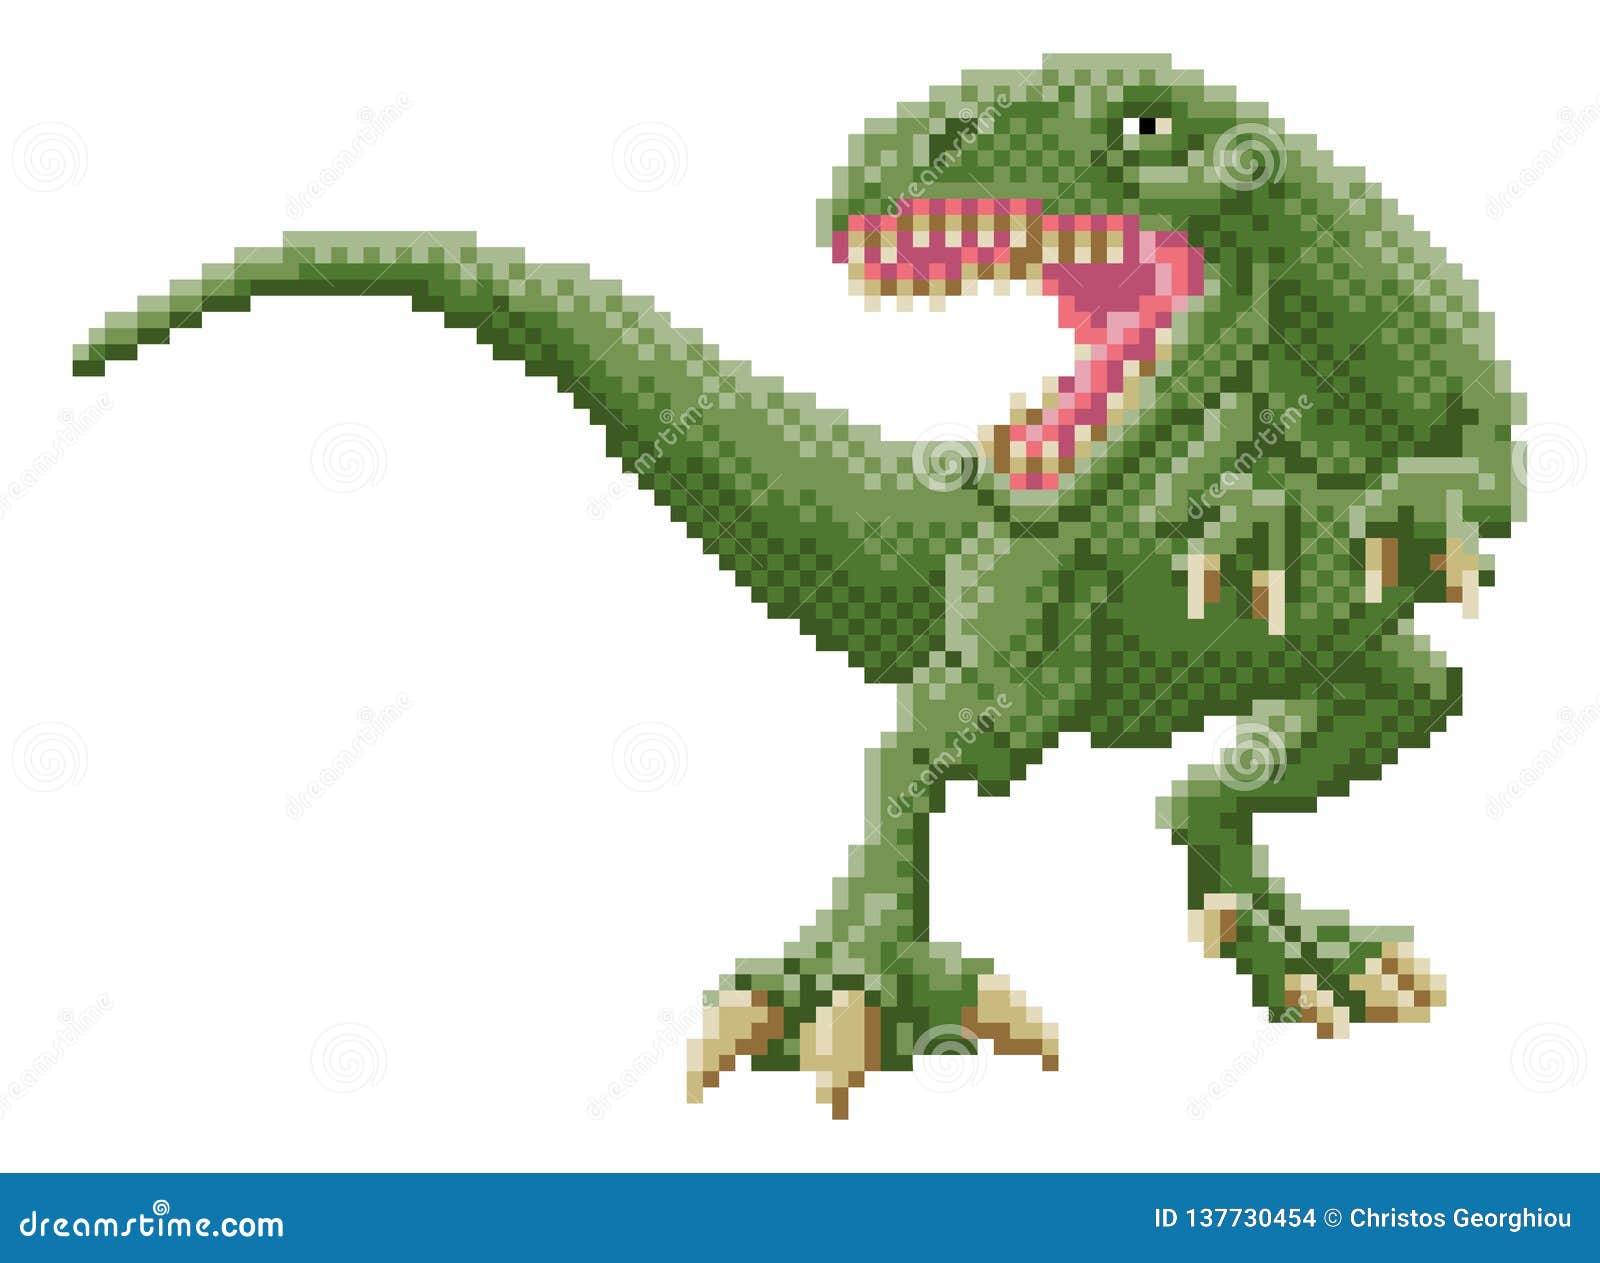 Dinosaur Trex 8 Bit Pixel Art Arcade Game Cartoon Stock Vector -  Illustration of mascot, arcade: 137730454